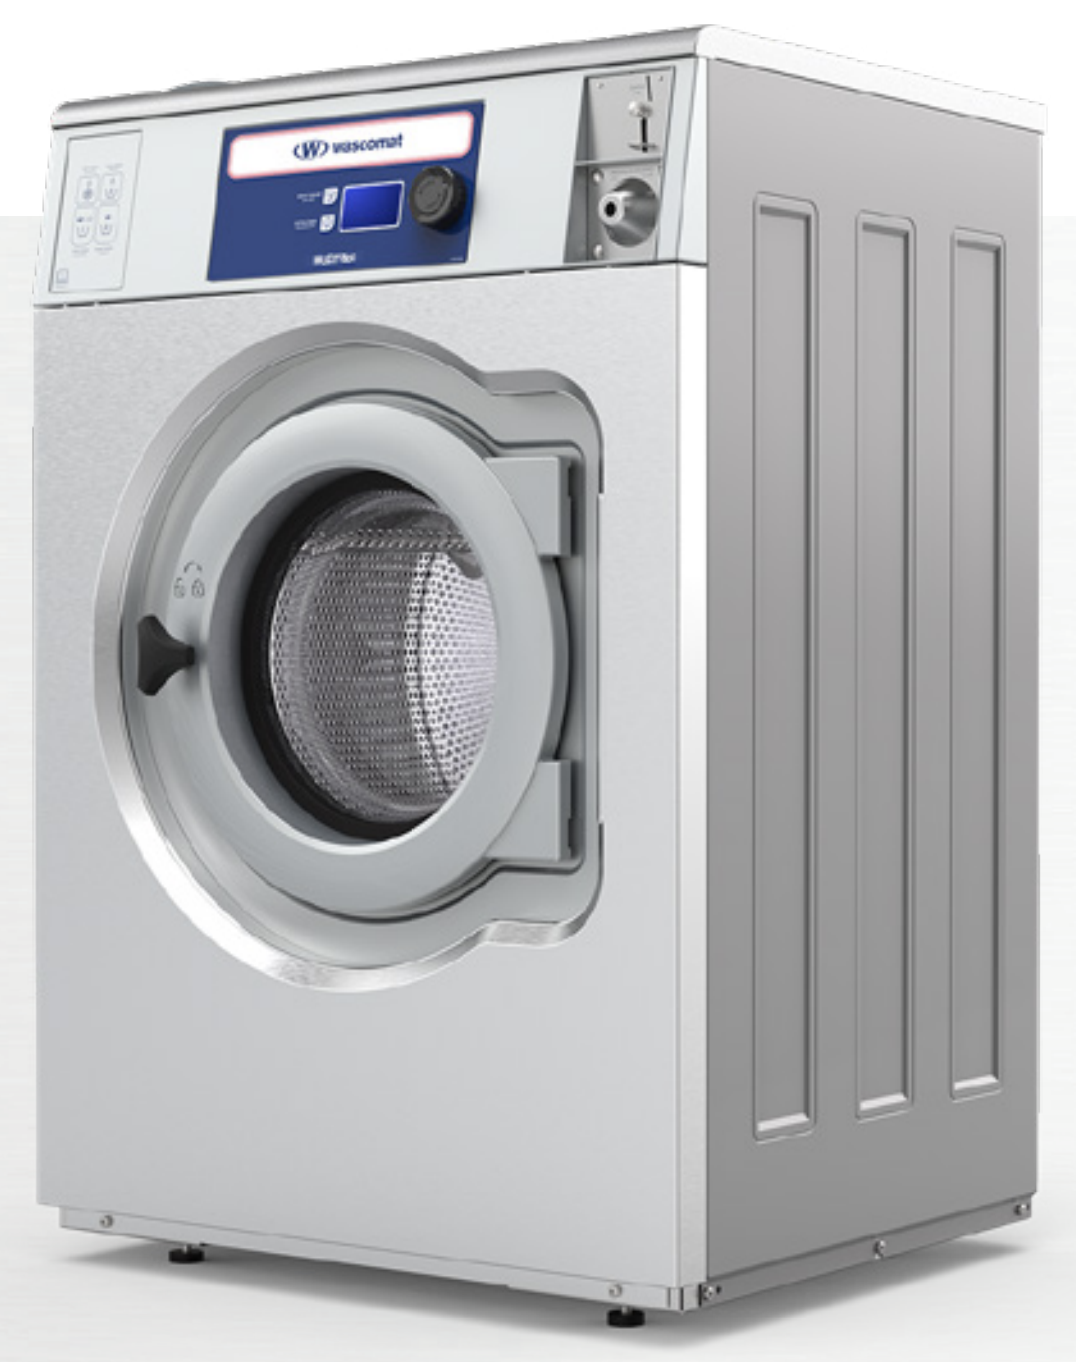 New 2022 Wascomat Wud718 - Cardinal Laundry Equipment Co